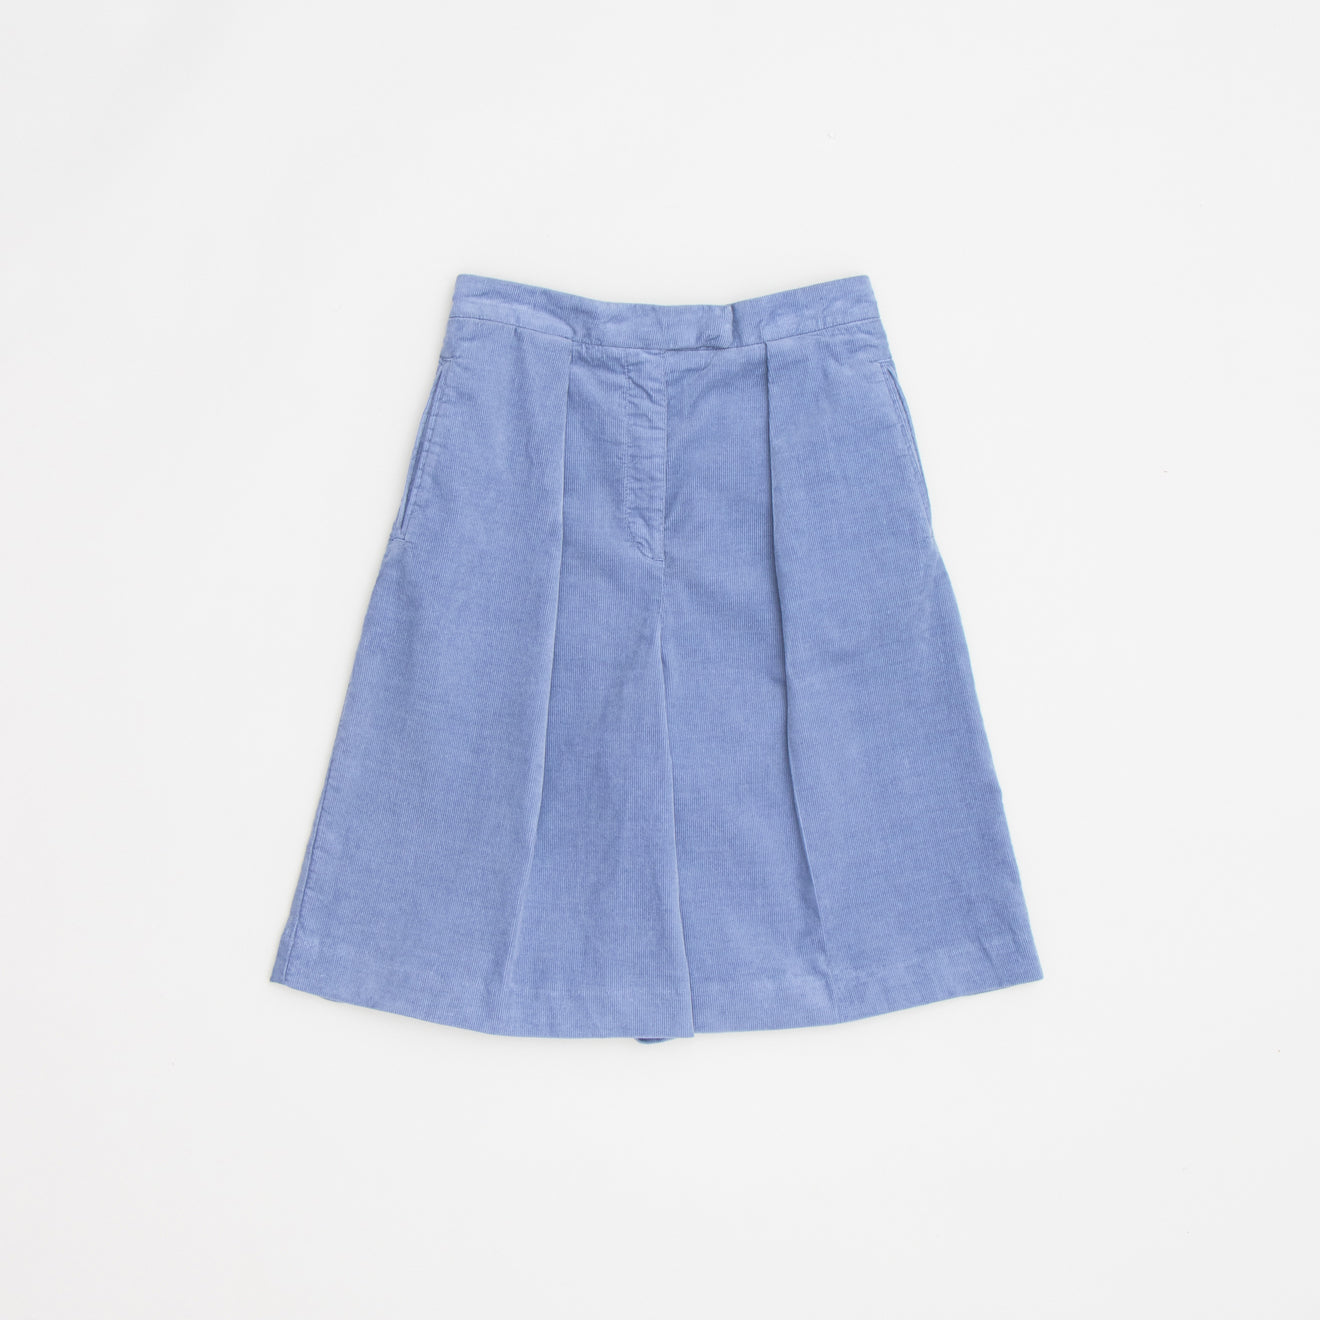 Girls Blue Corduroy Shorts